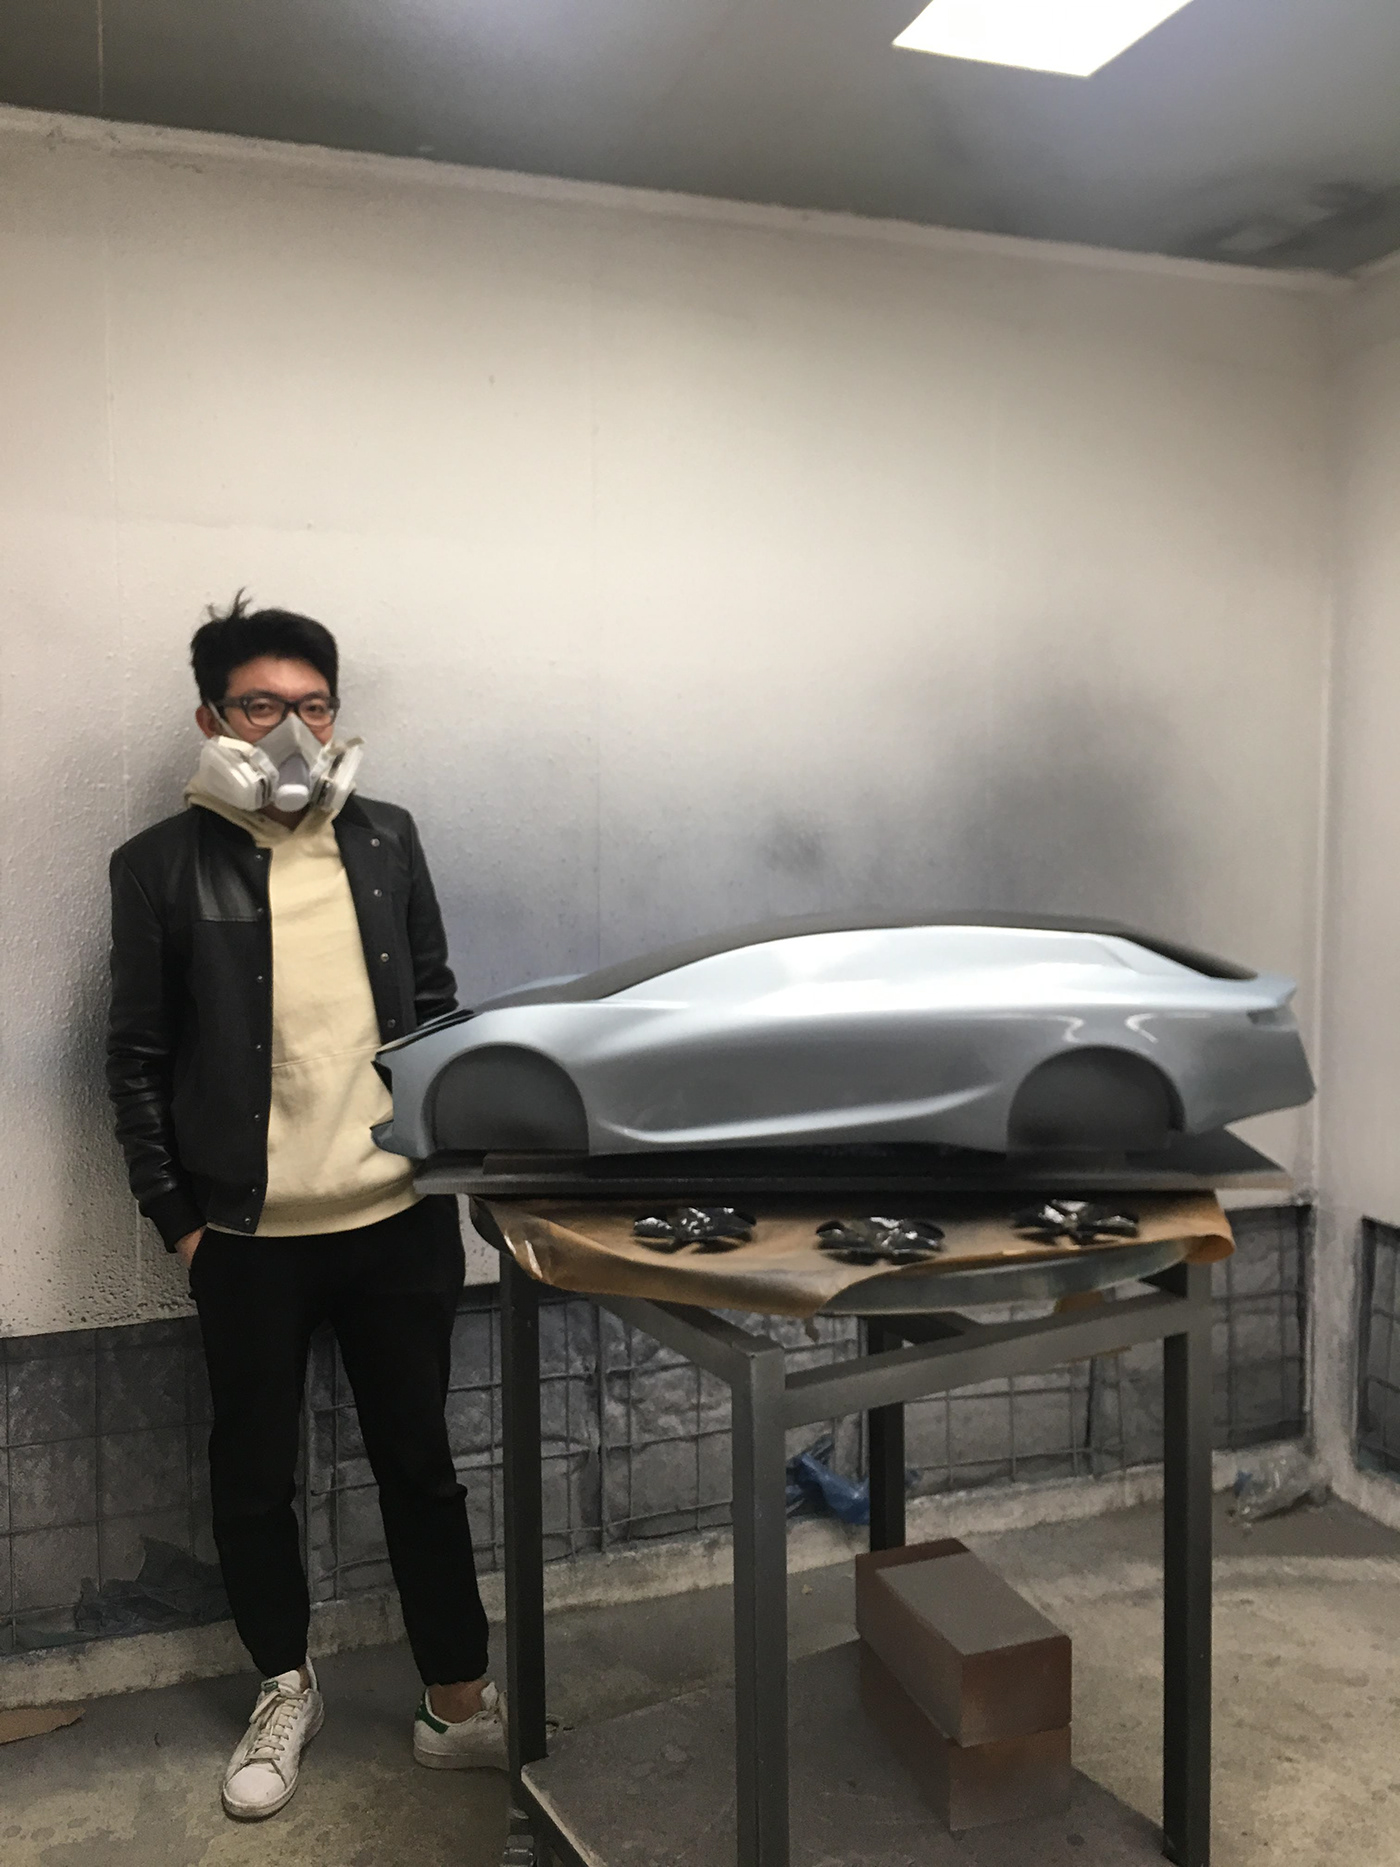 aston martin car design cnc Foam Physical Model